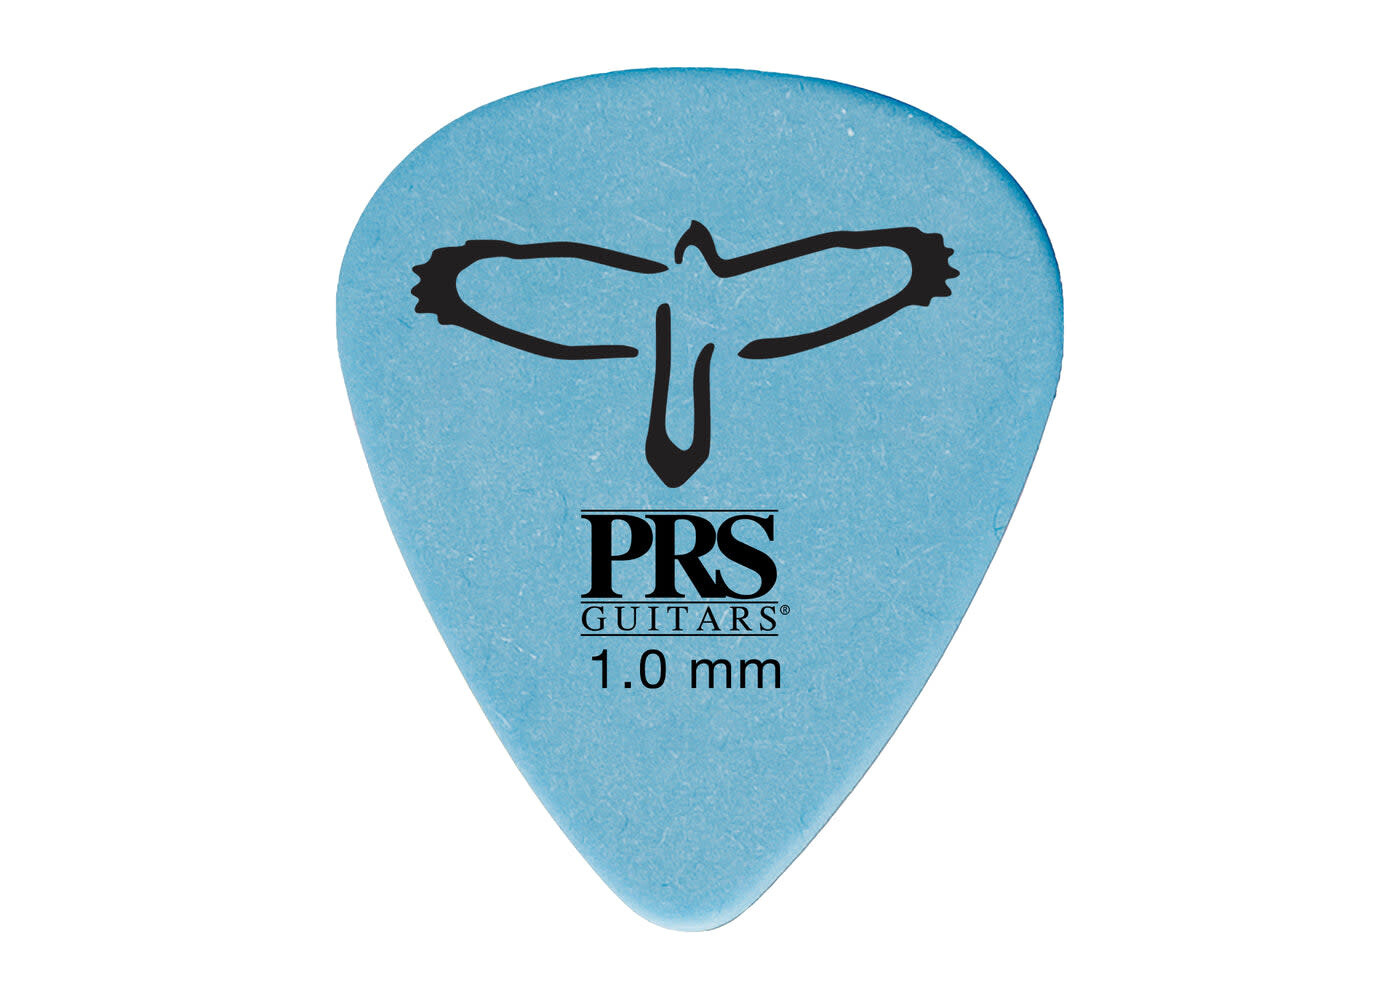 PRS Guitars PRS Delrin Picks, Blue 1.00mm - 12 Pack